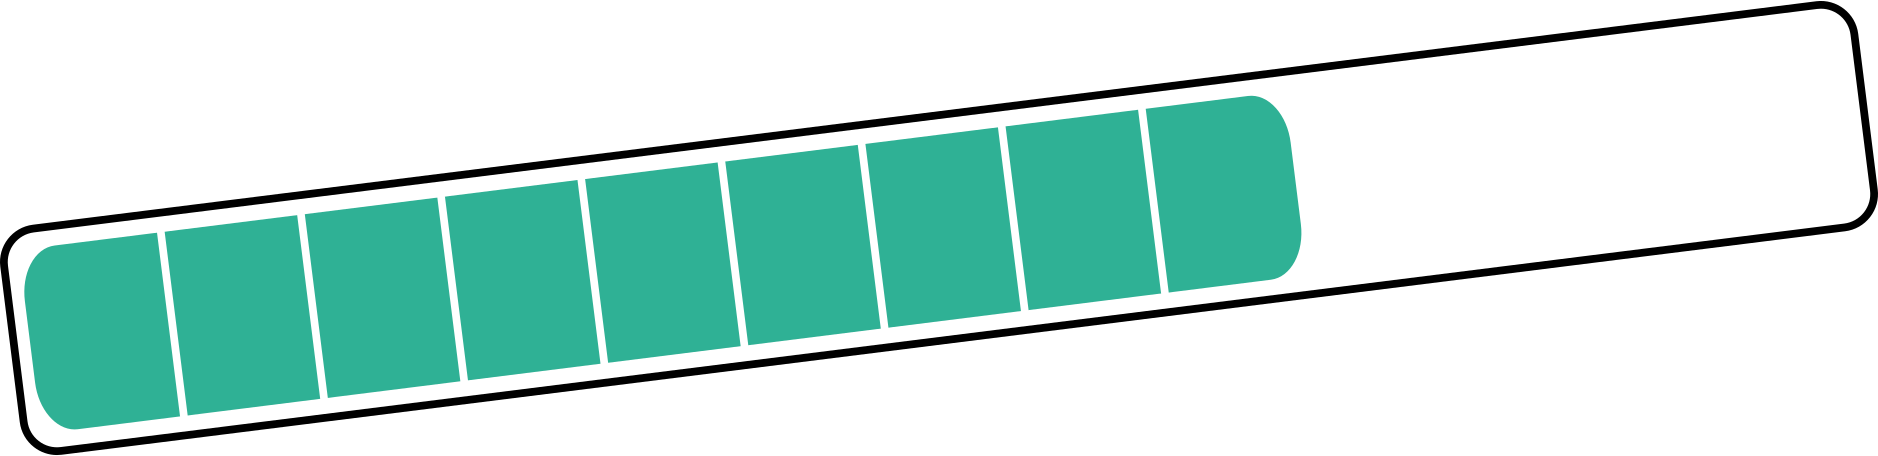 loading scale Illustration in PNG, SVG